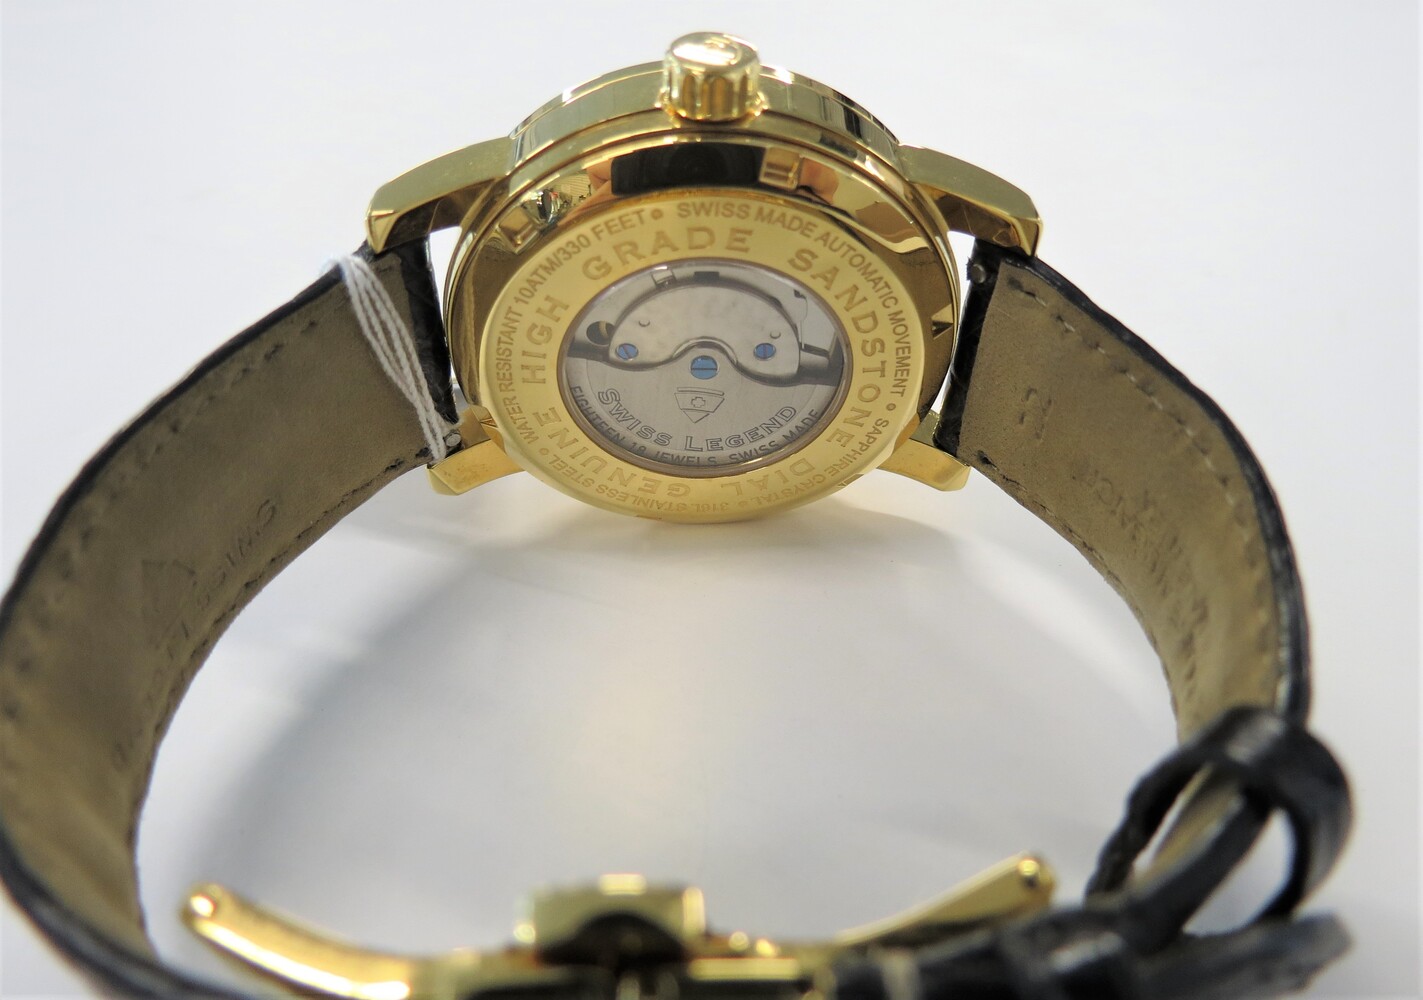 Swiss Legend Blue Sandstone Automatic Watch 